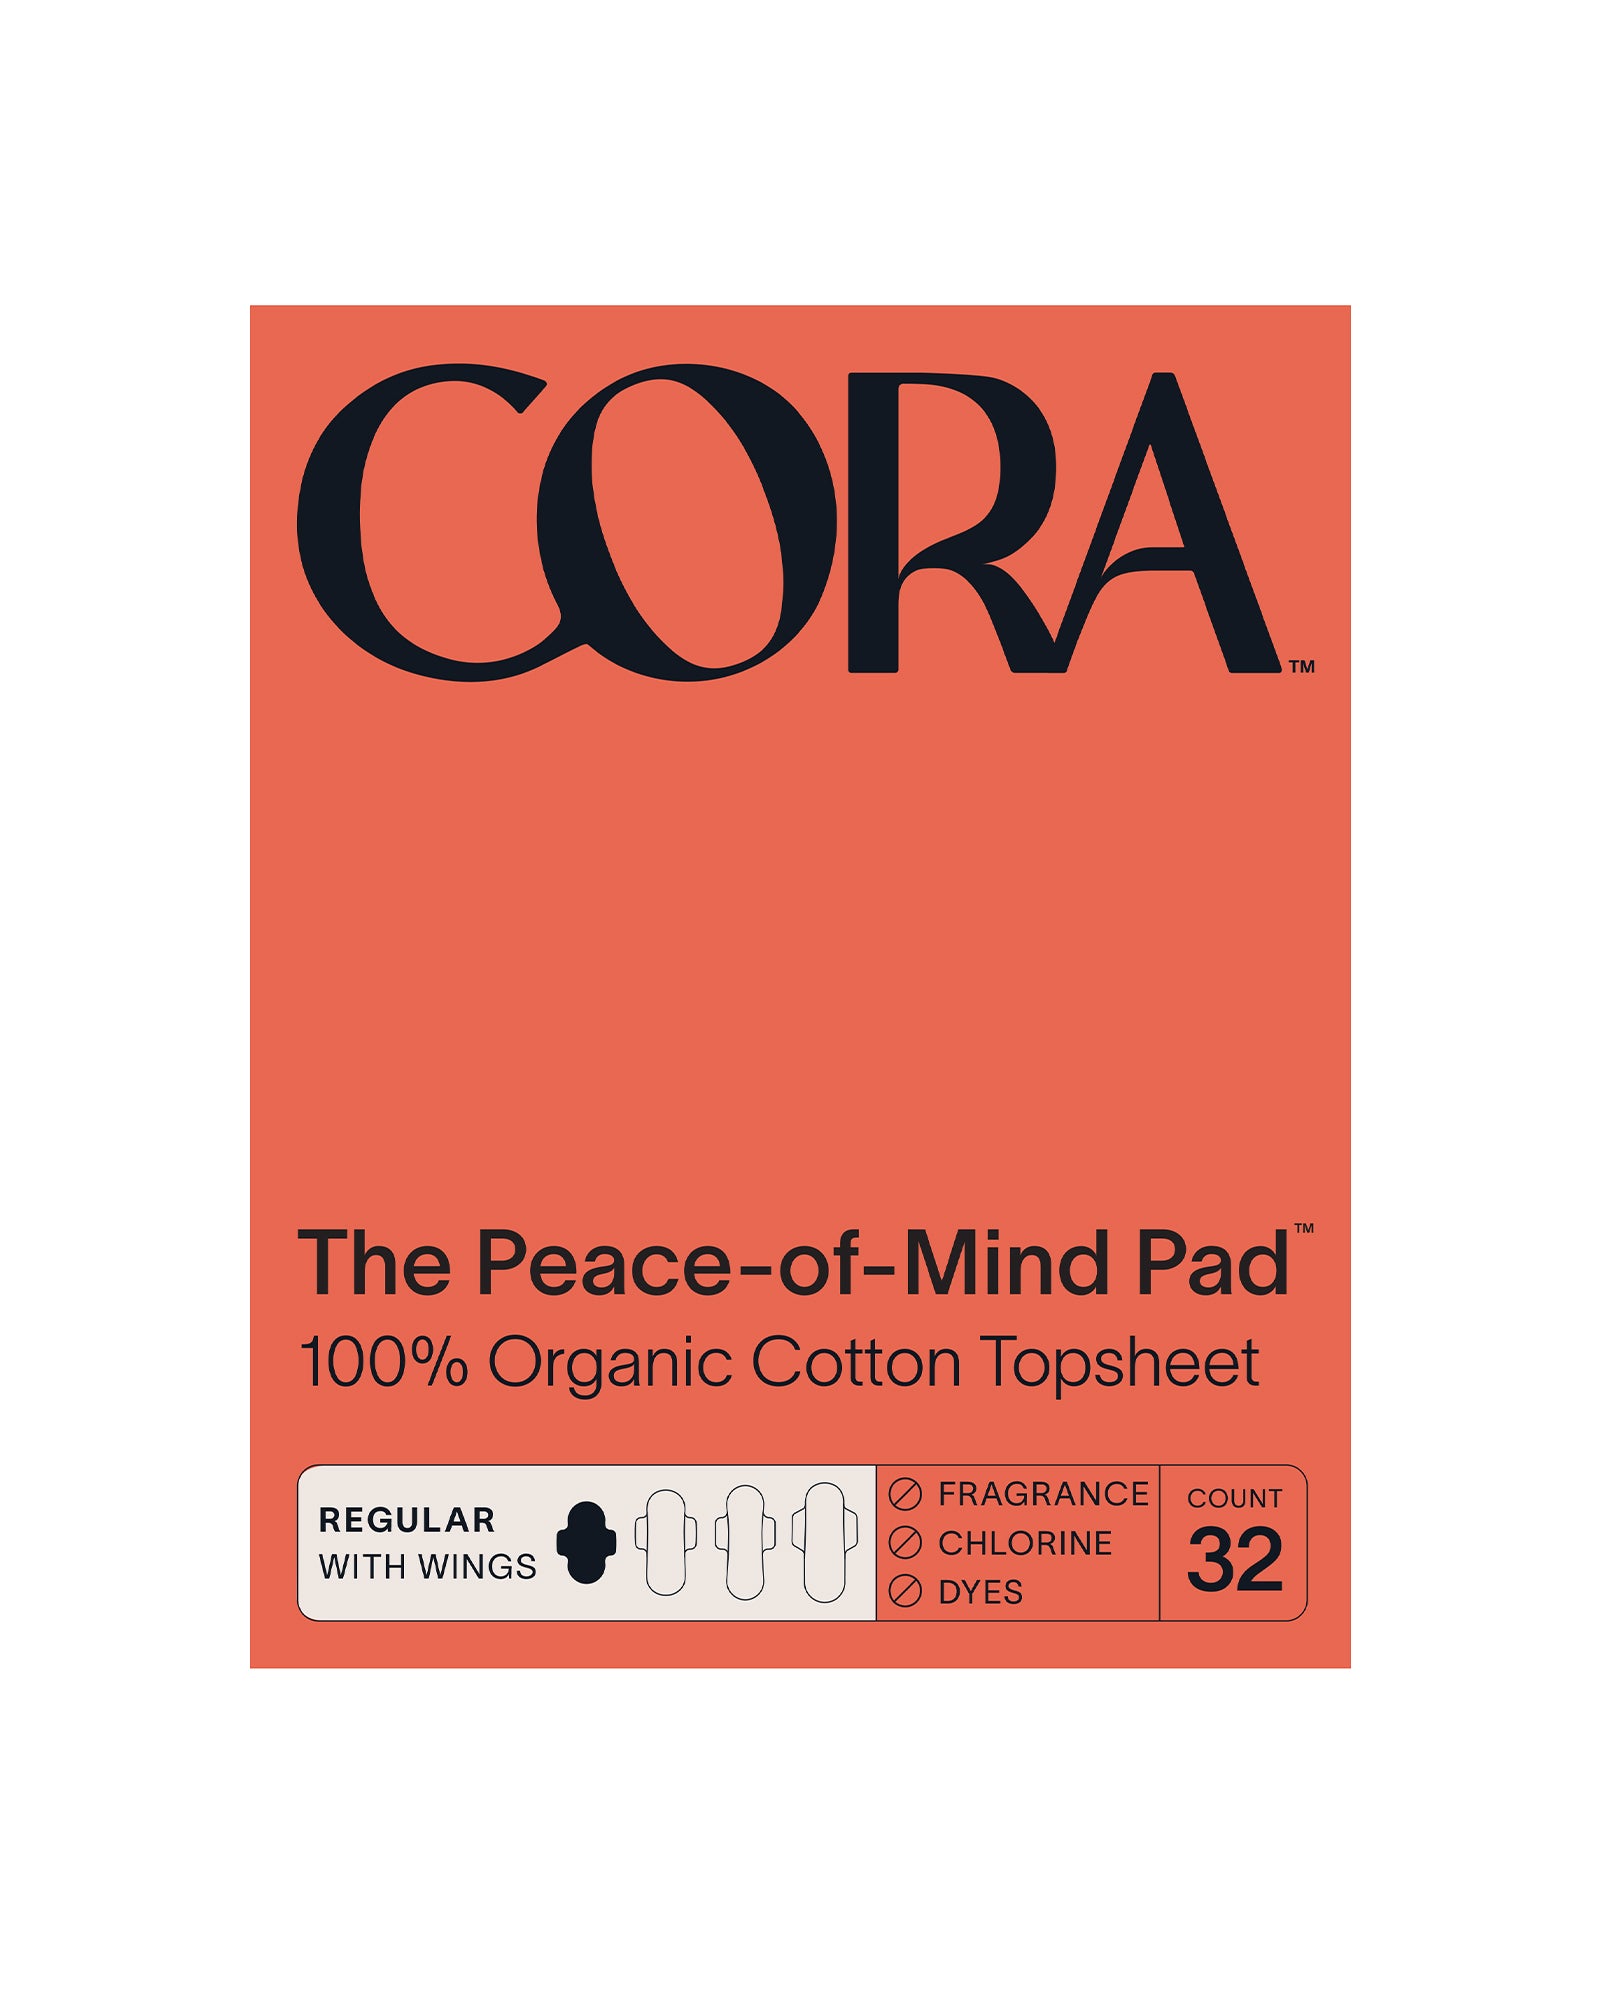 Cora Period Liners, 100% Organic Cotton Topsheet